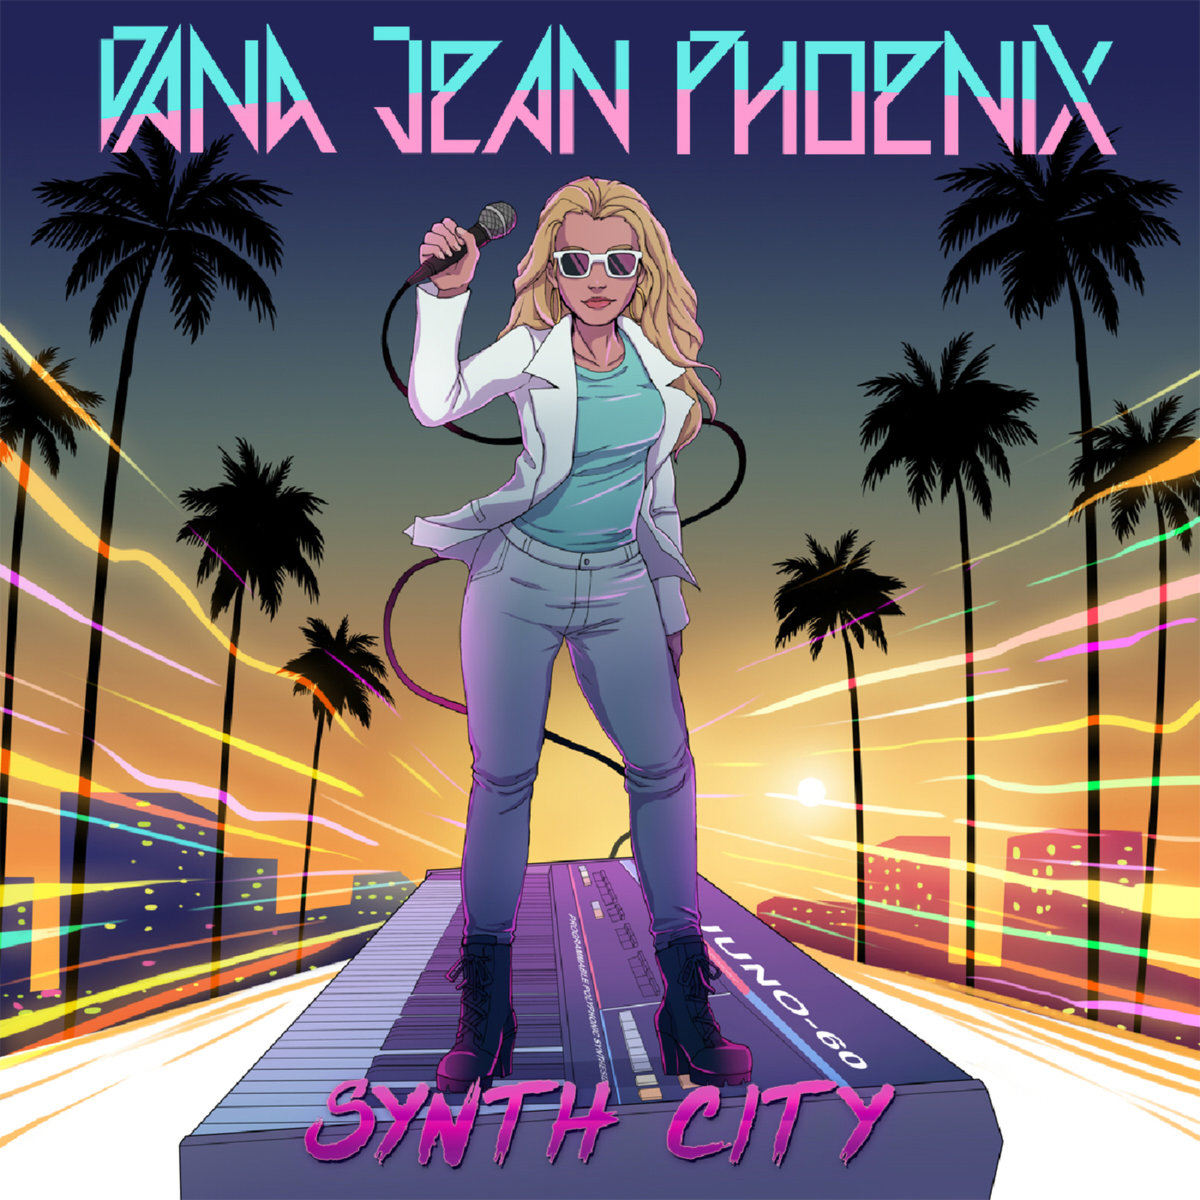 Dana+Jean+Phoenix+ +Synth+City+%28Album+Cover%29 - Dana Jean Phoenix - Synth City